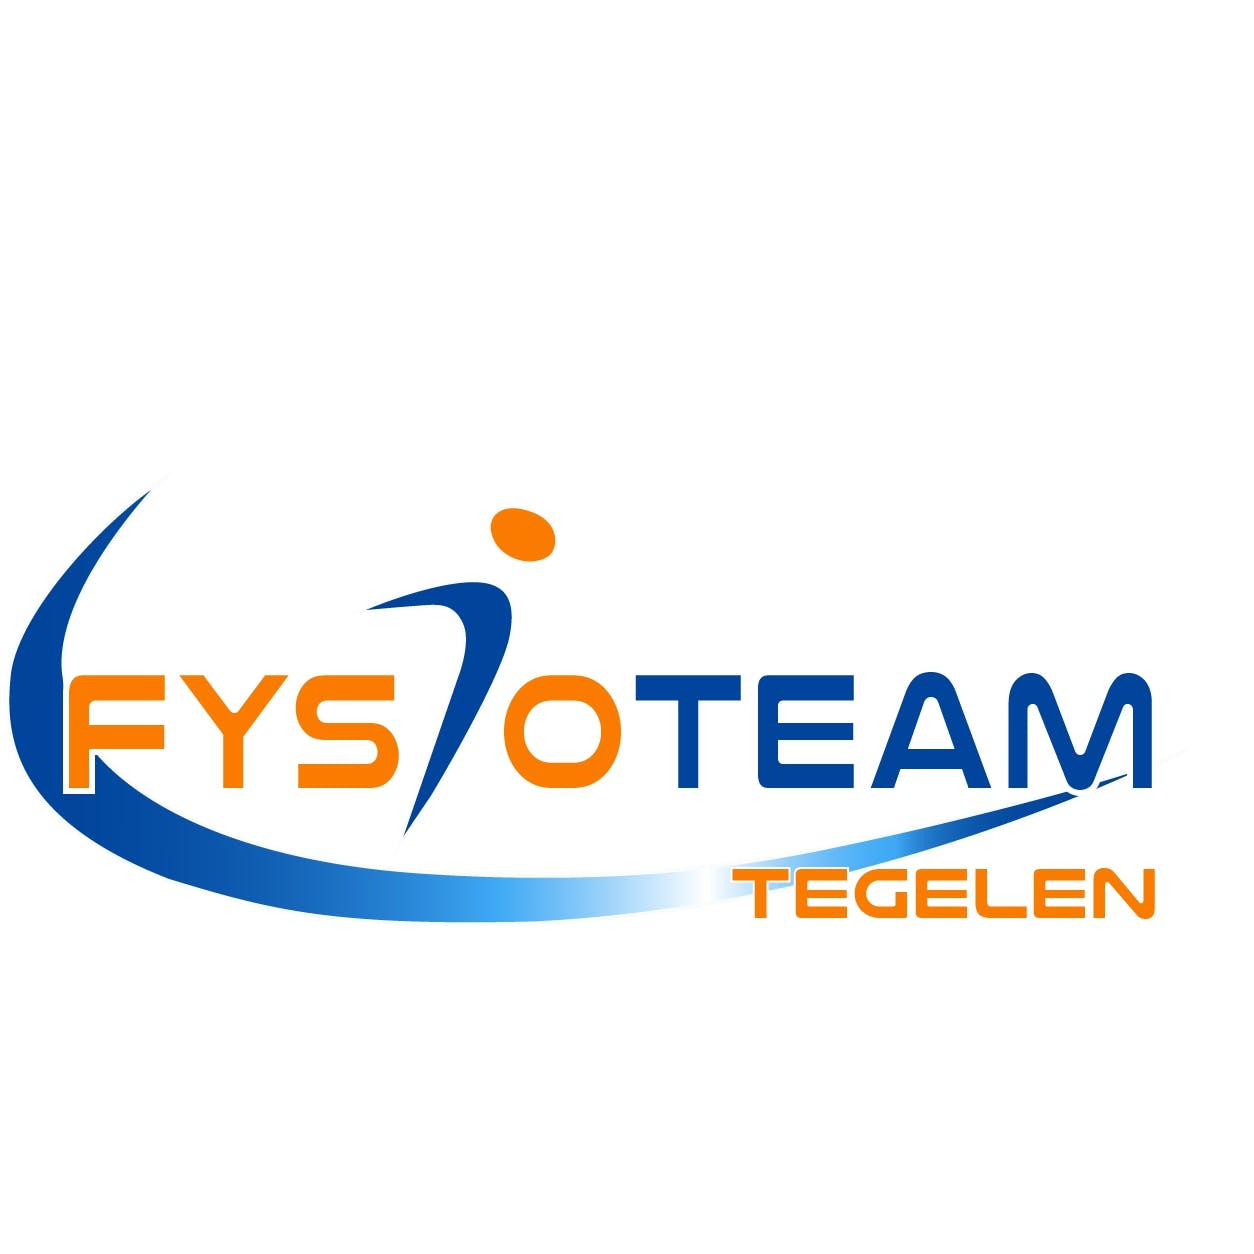 2MoveMindful Business Running & Personal Coaching Venlo Coach Fysioteam Tegelen logo